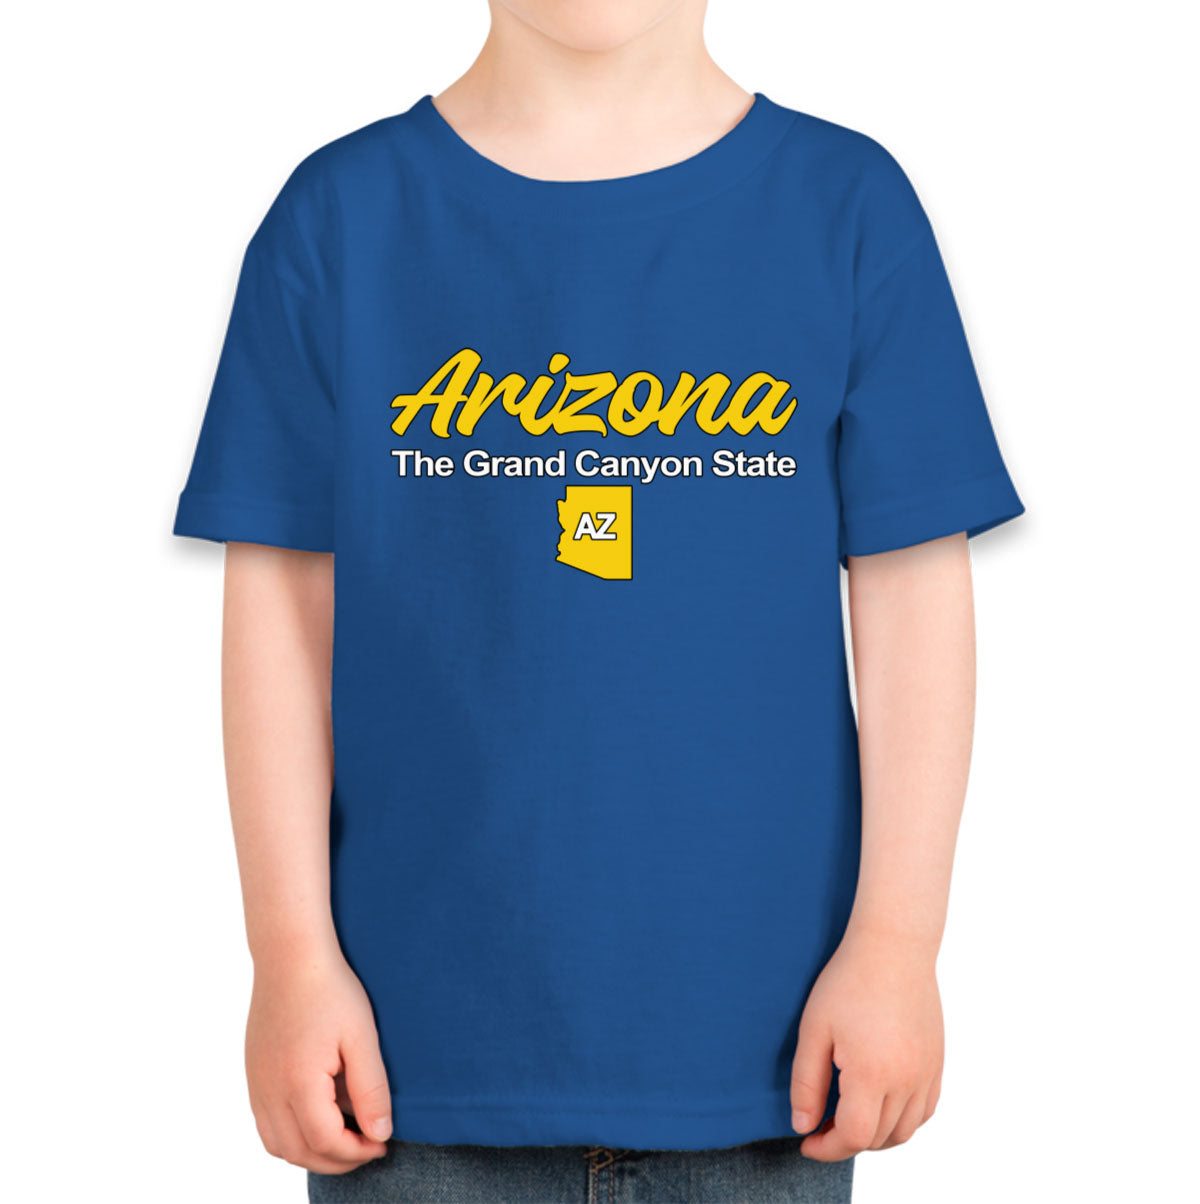 Arizona The Grand Canyon State Toddler T-shirt